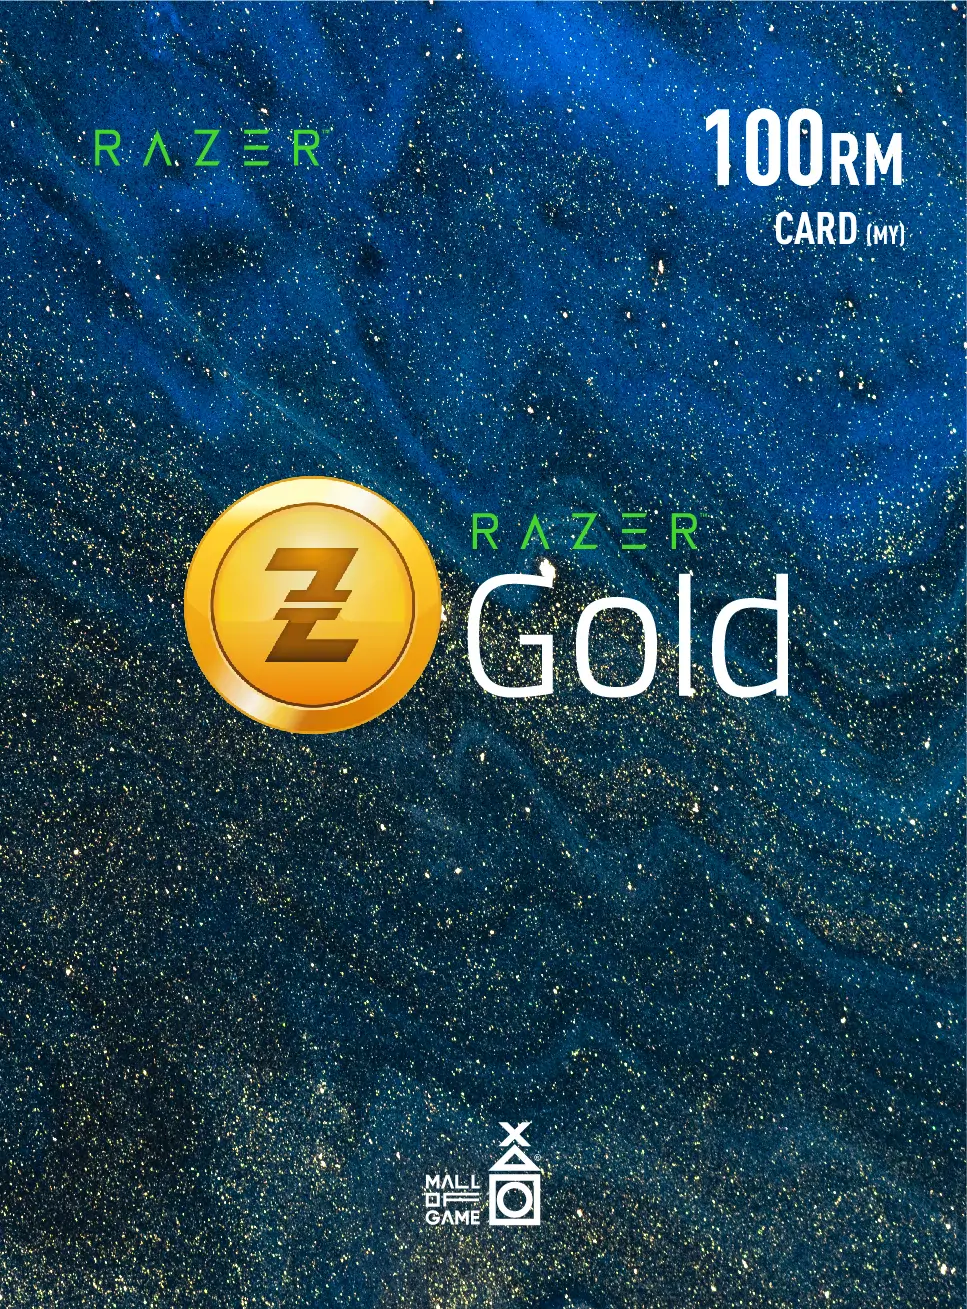 Razer Gold RM100 (MY)